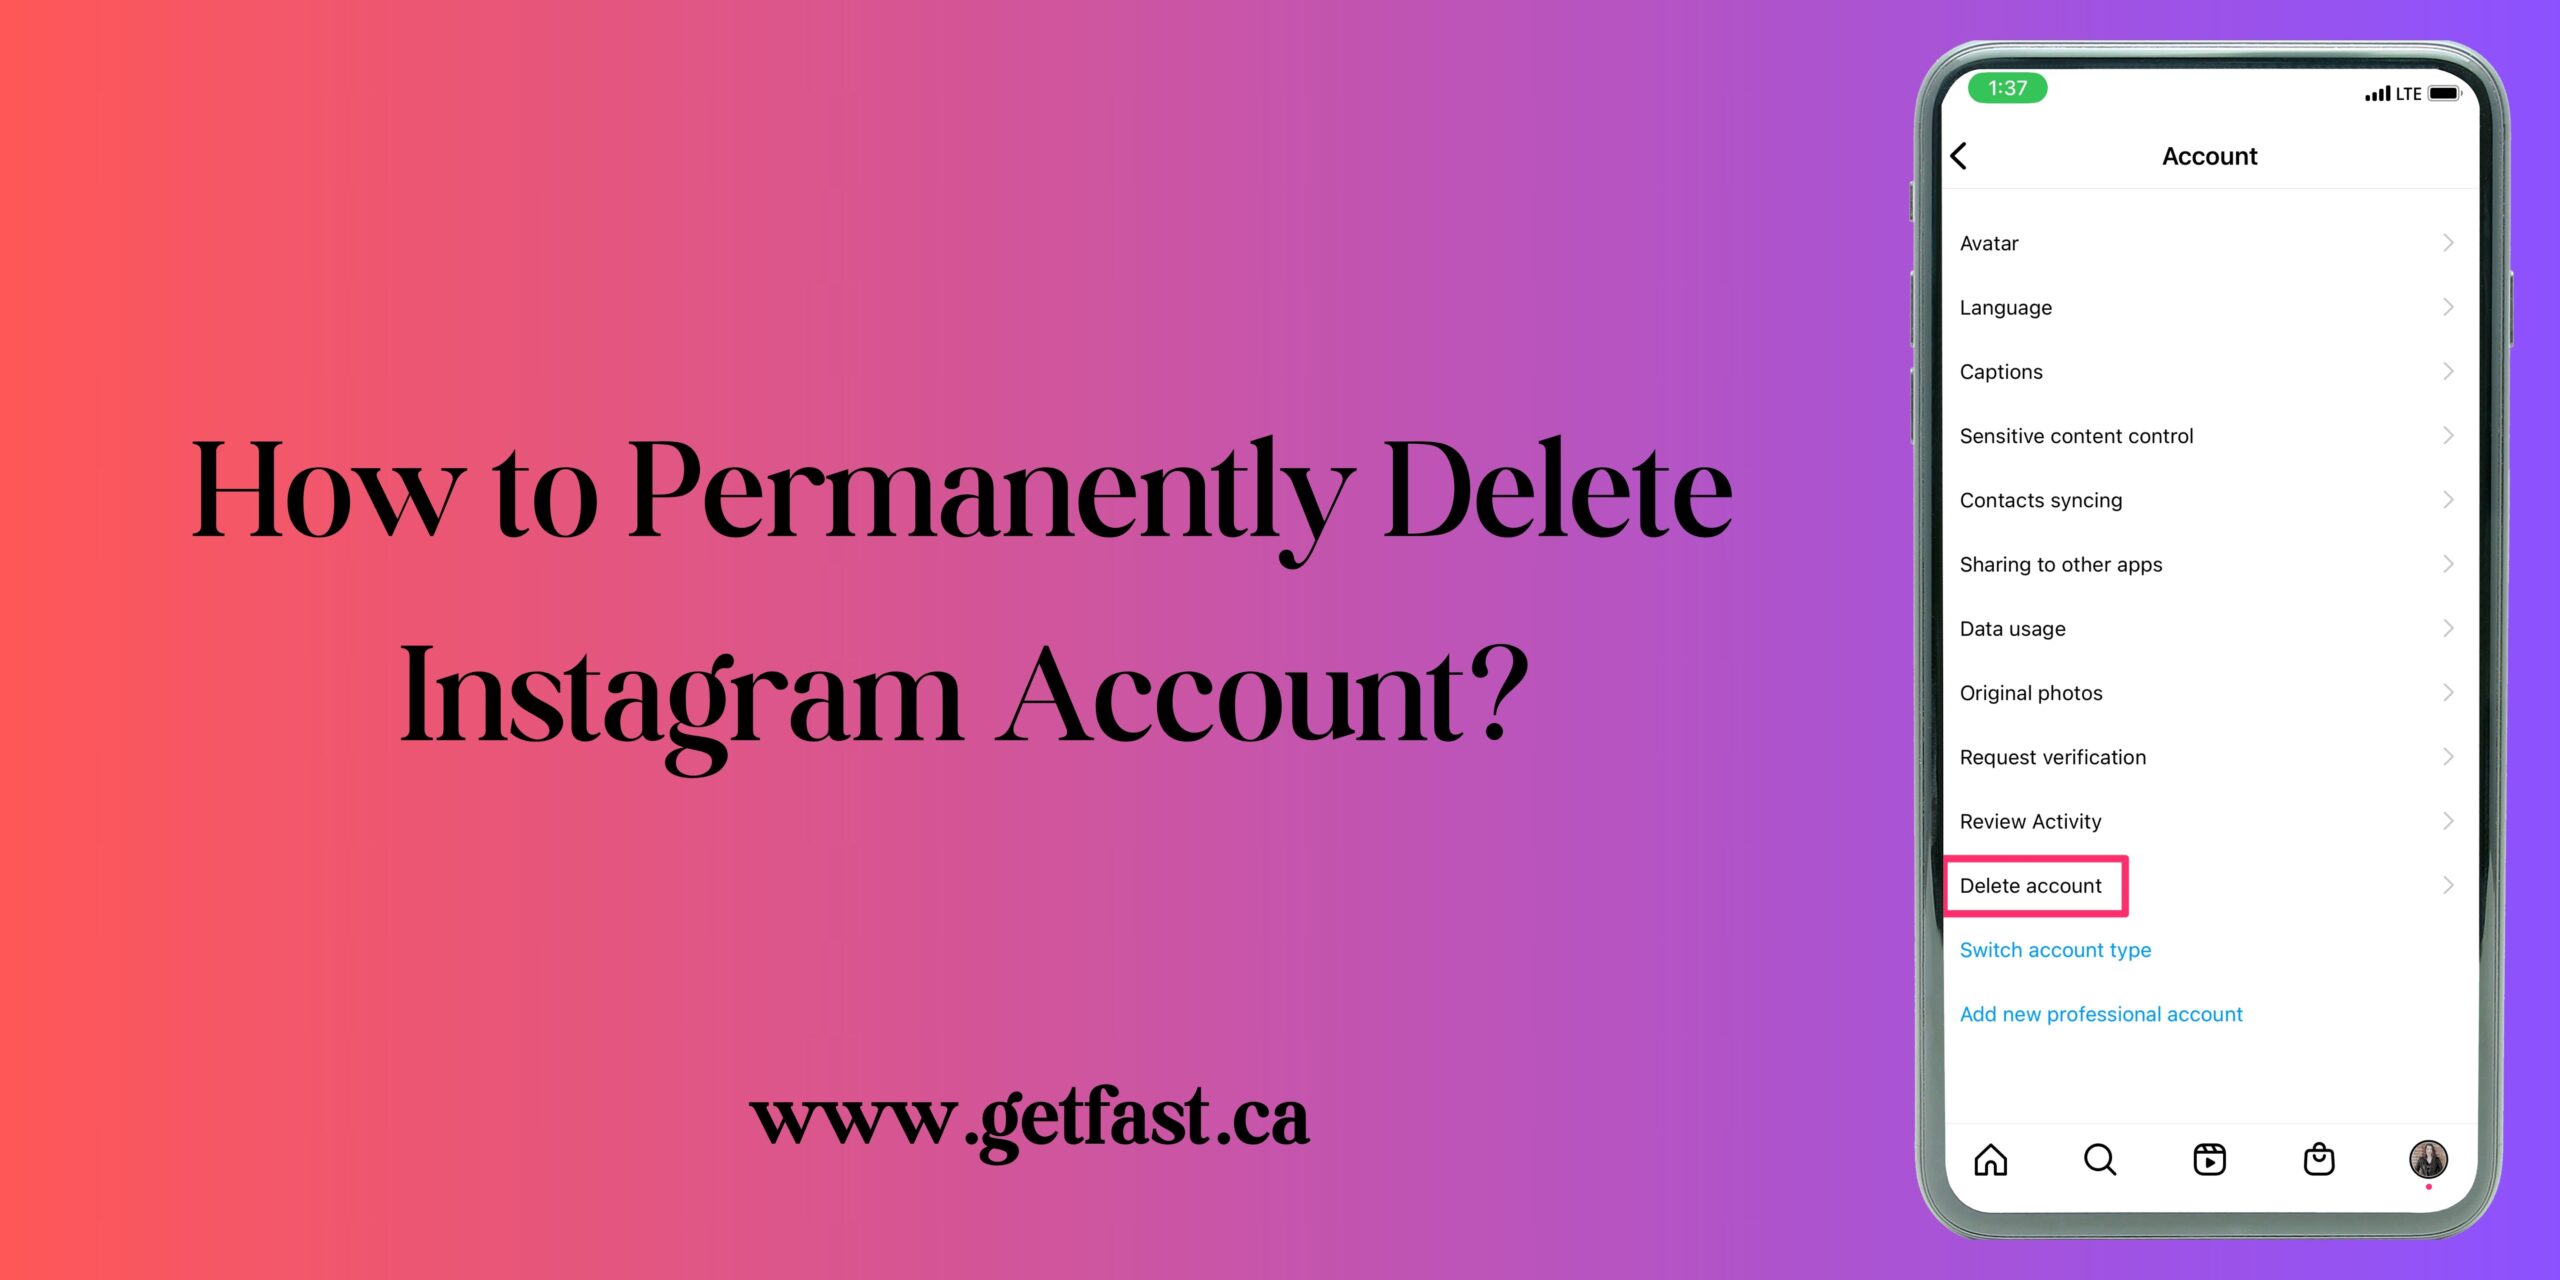 How to Permanently Delete Instagram Account?